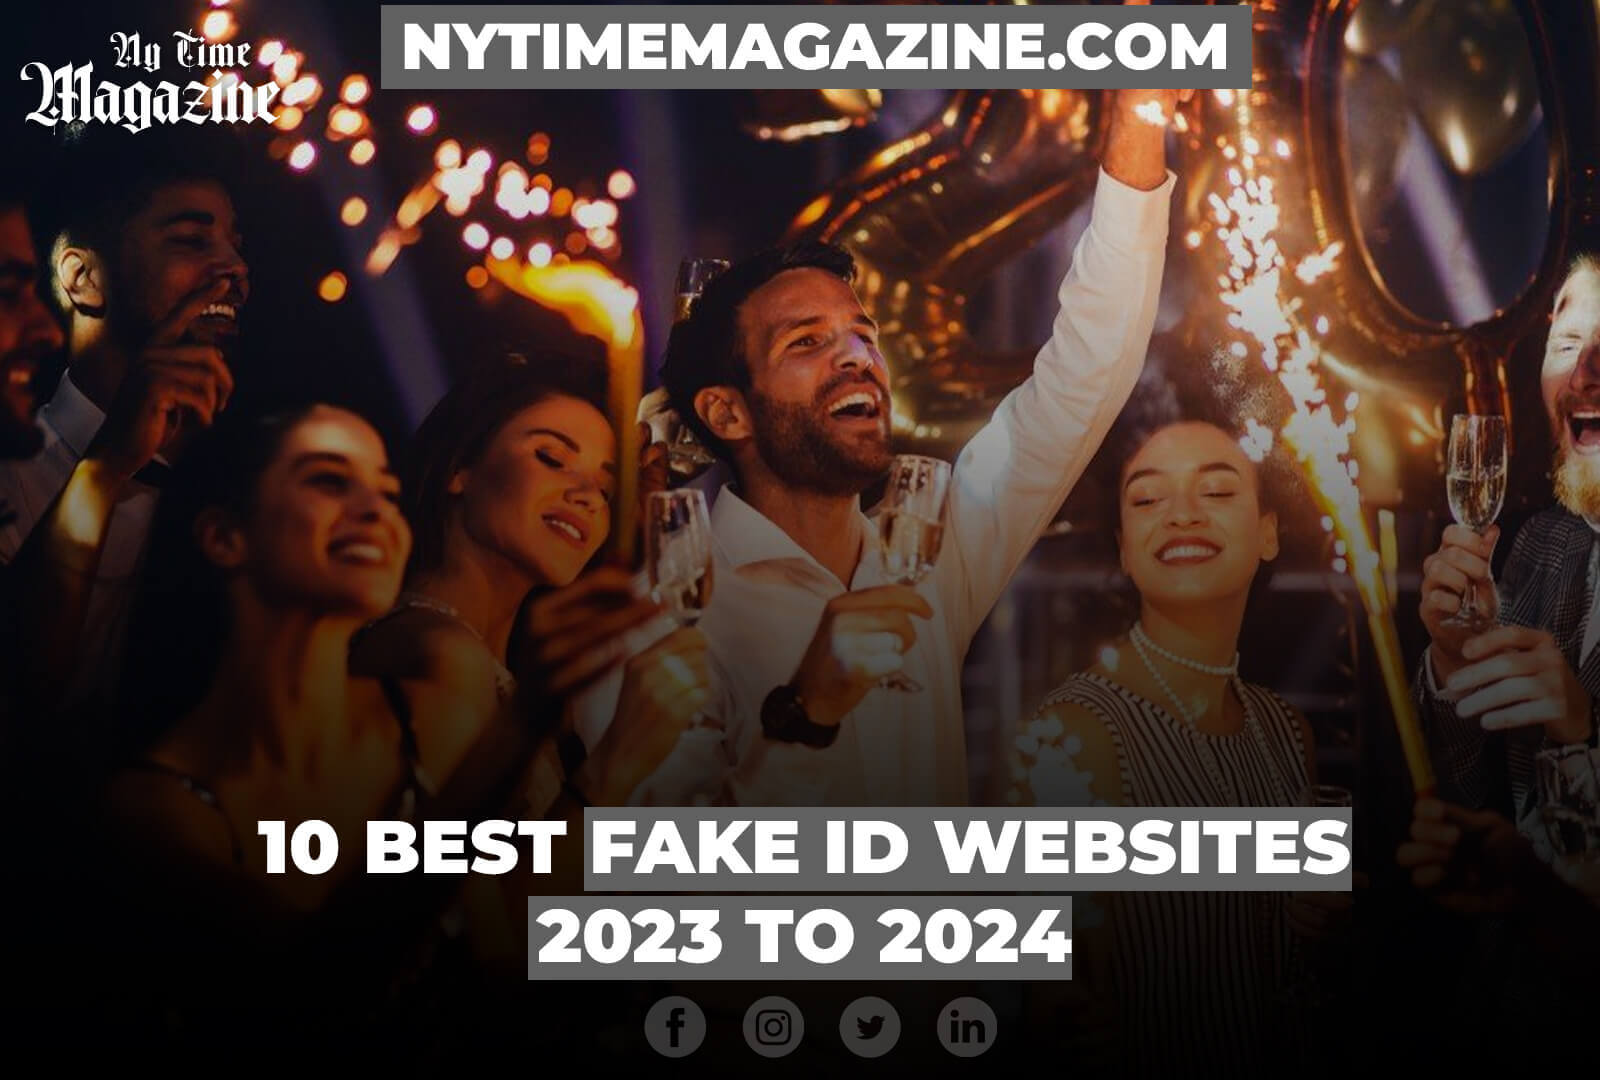 10 BEST FAKE ID WEBSITES 2023 TO 2024